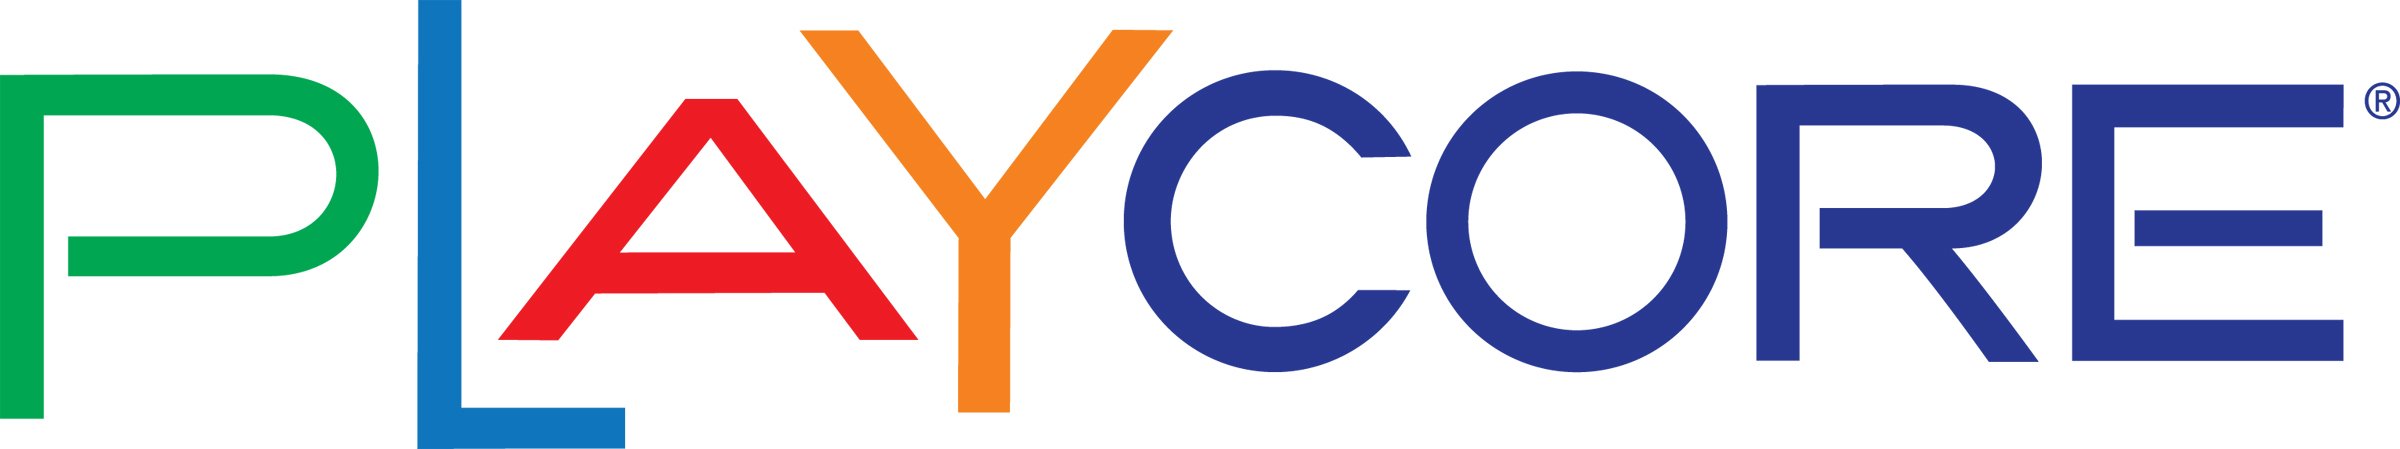 Playcore Logo.jpg